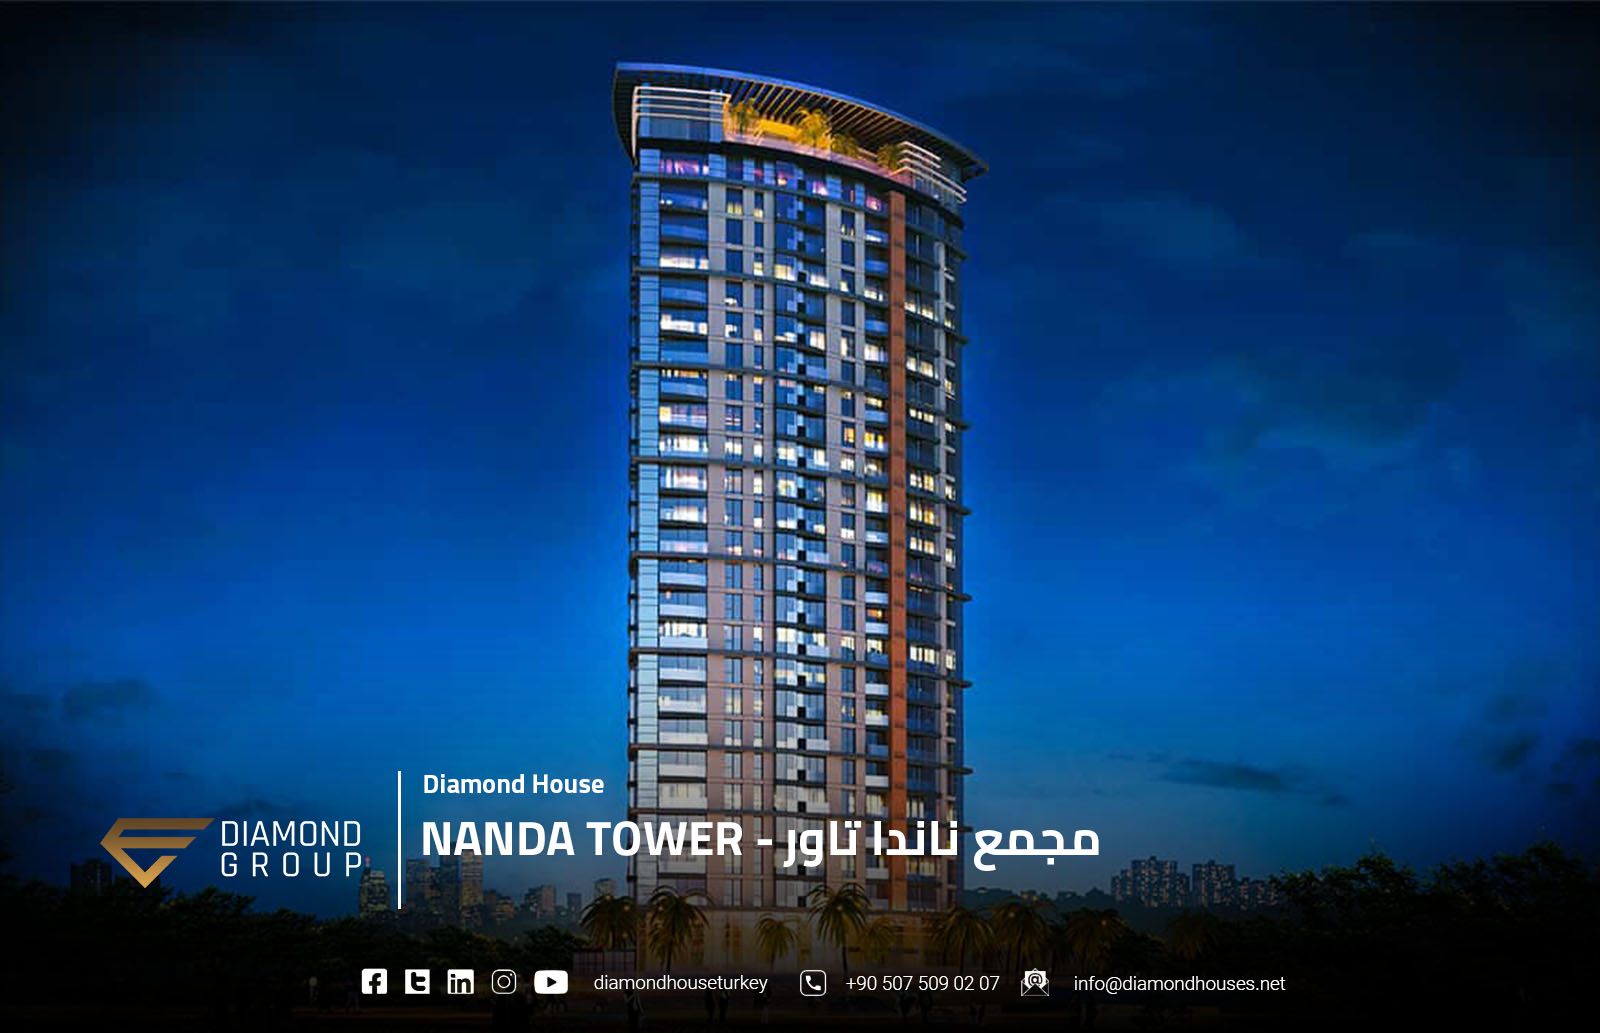 Nanda Tower